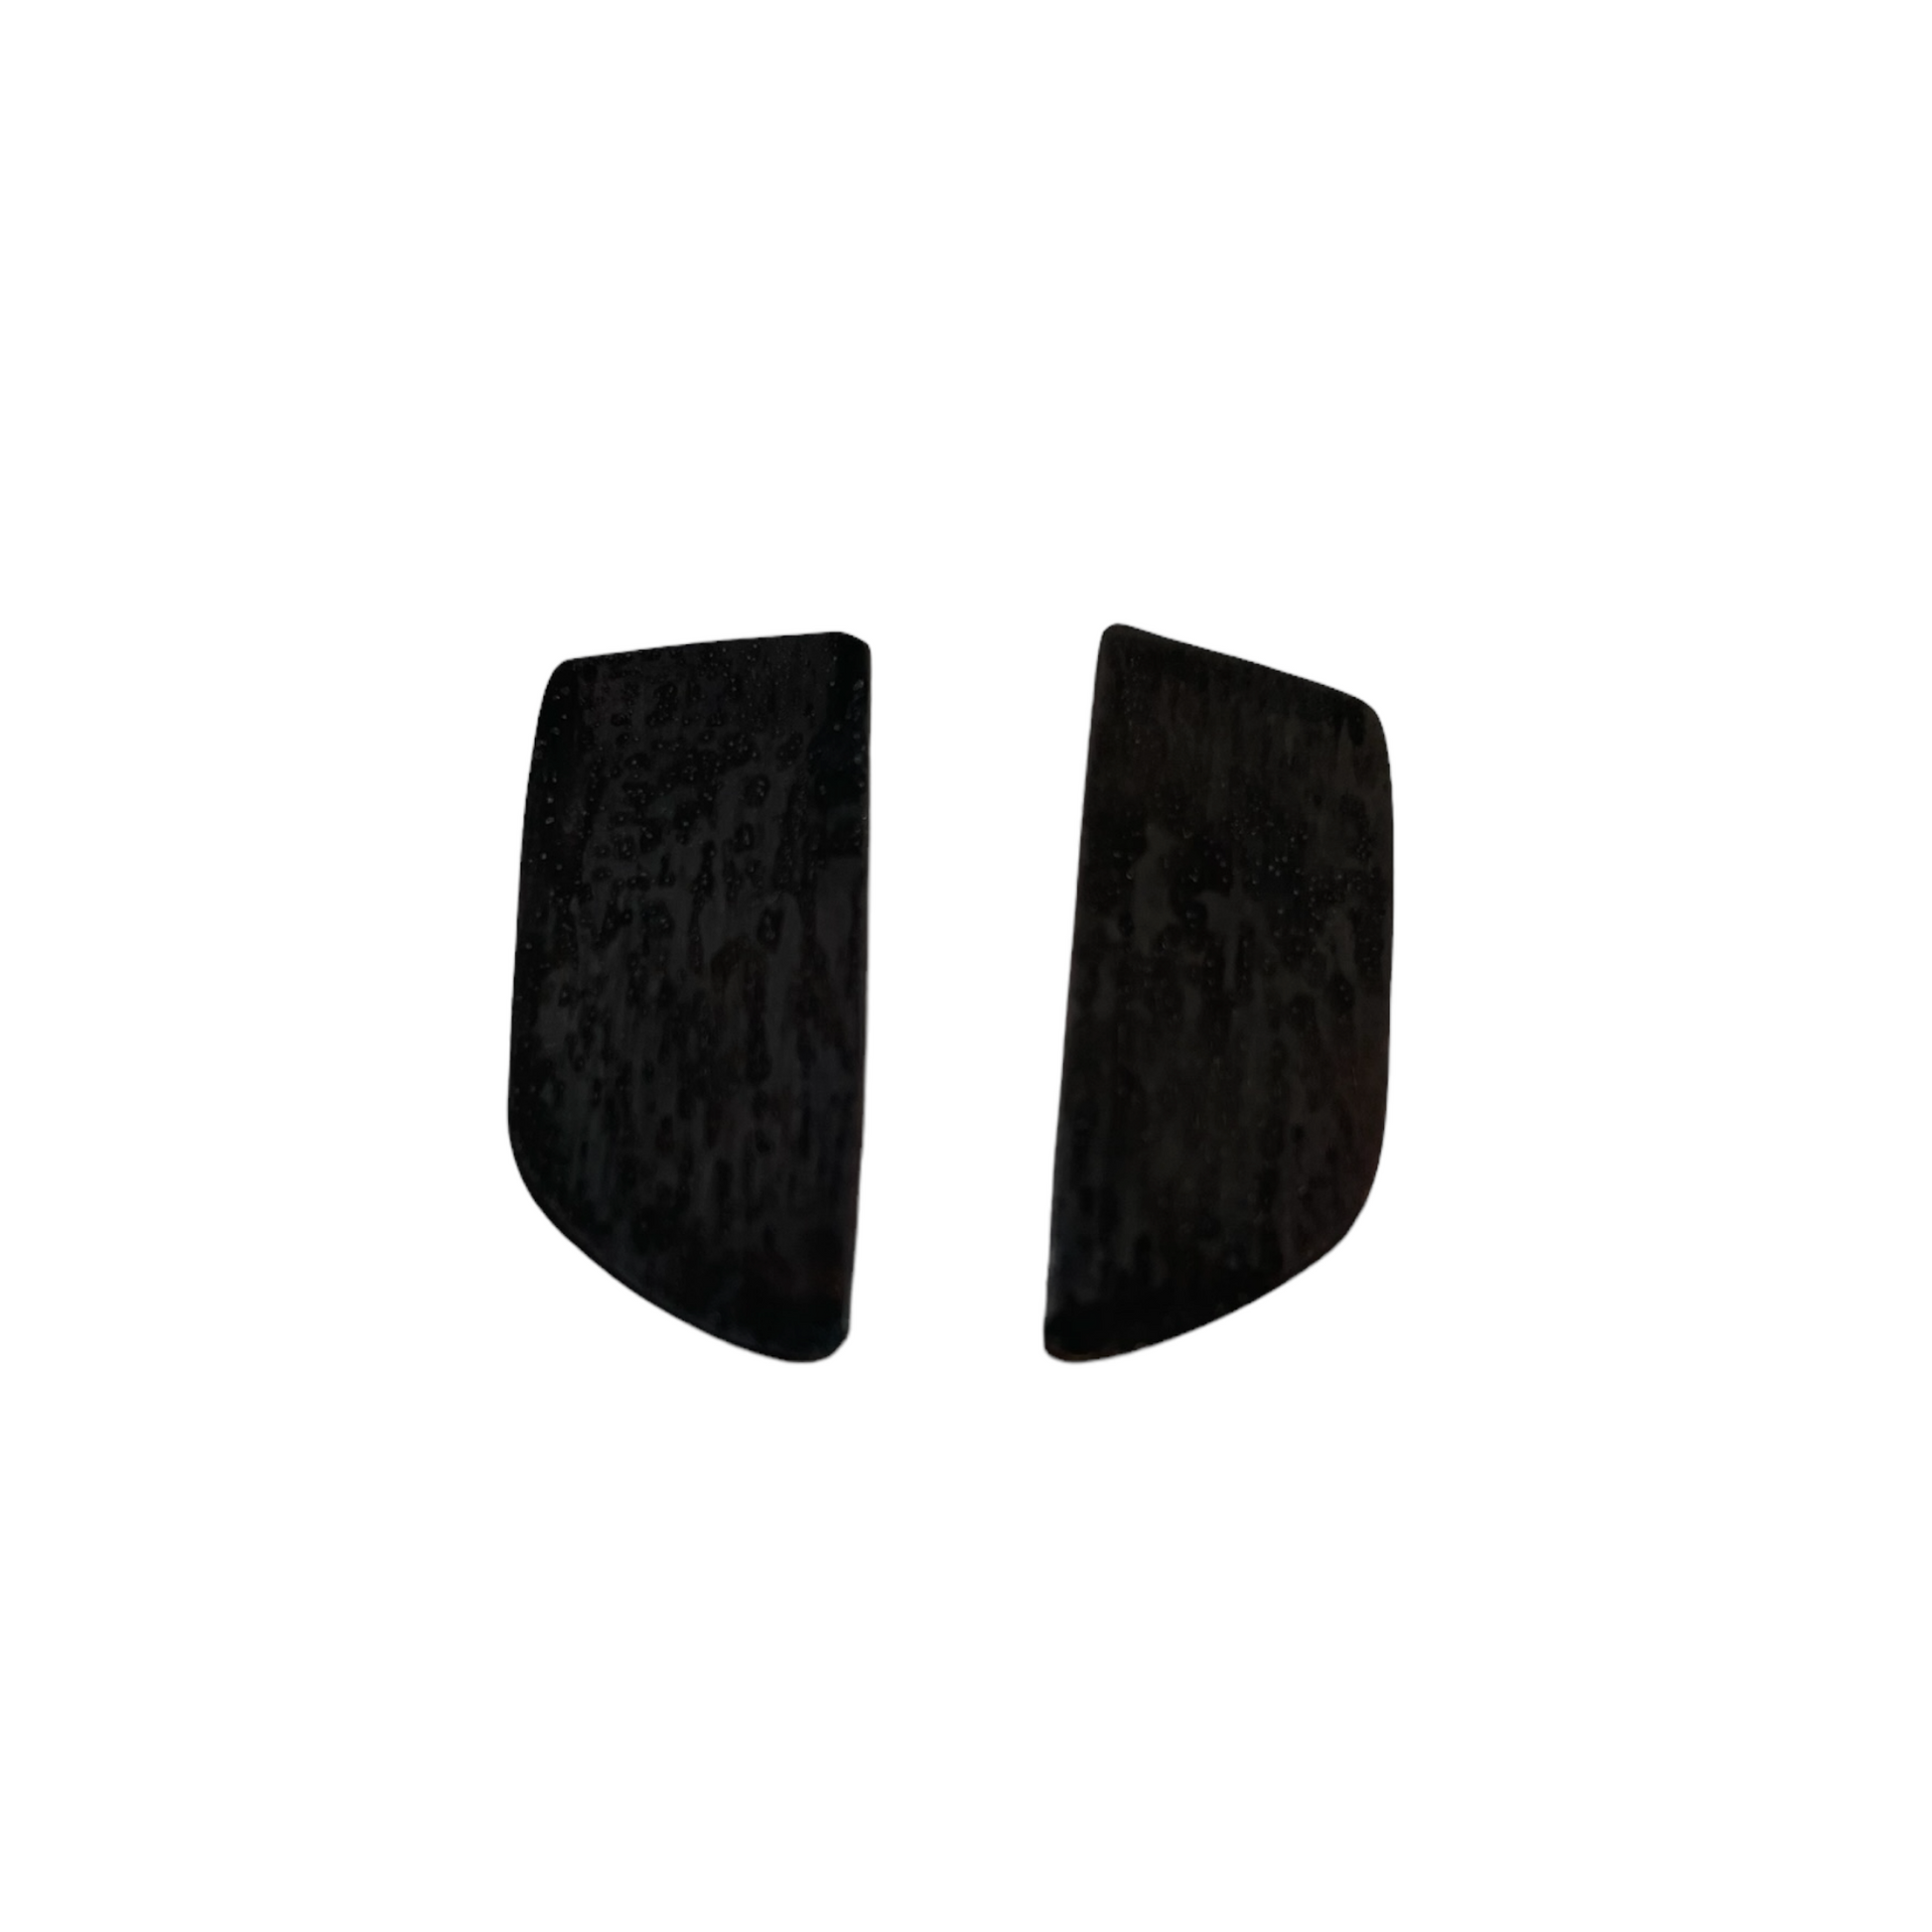 Oxidised brass earrings | Black Afairesis Earrings - CURIUDO